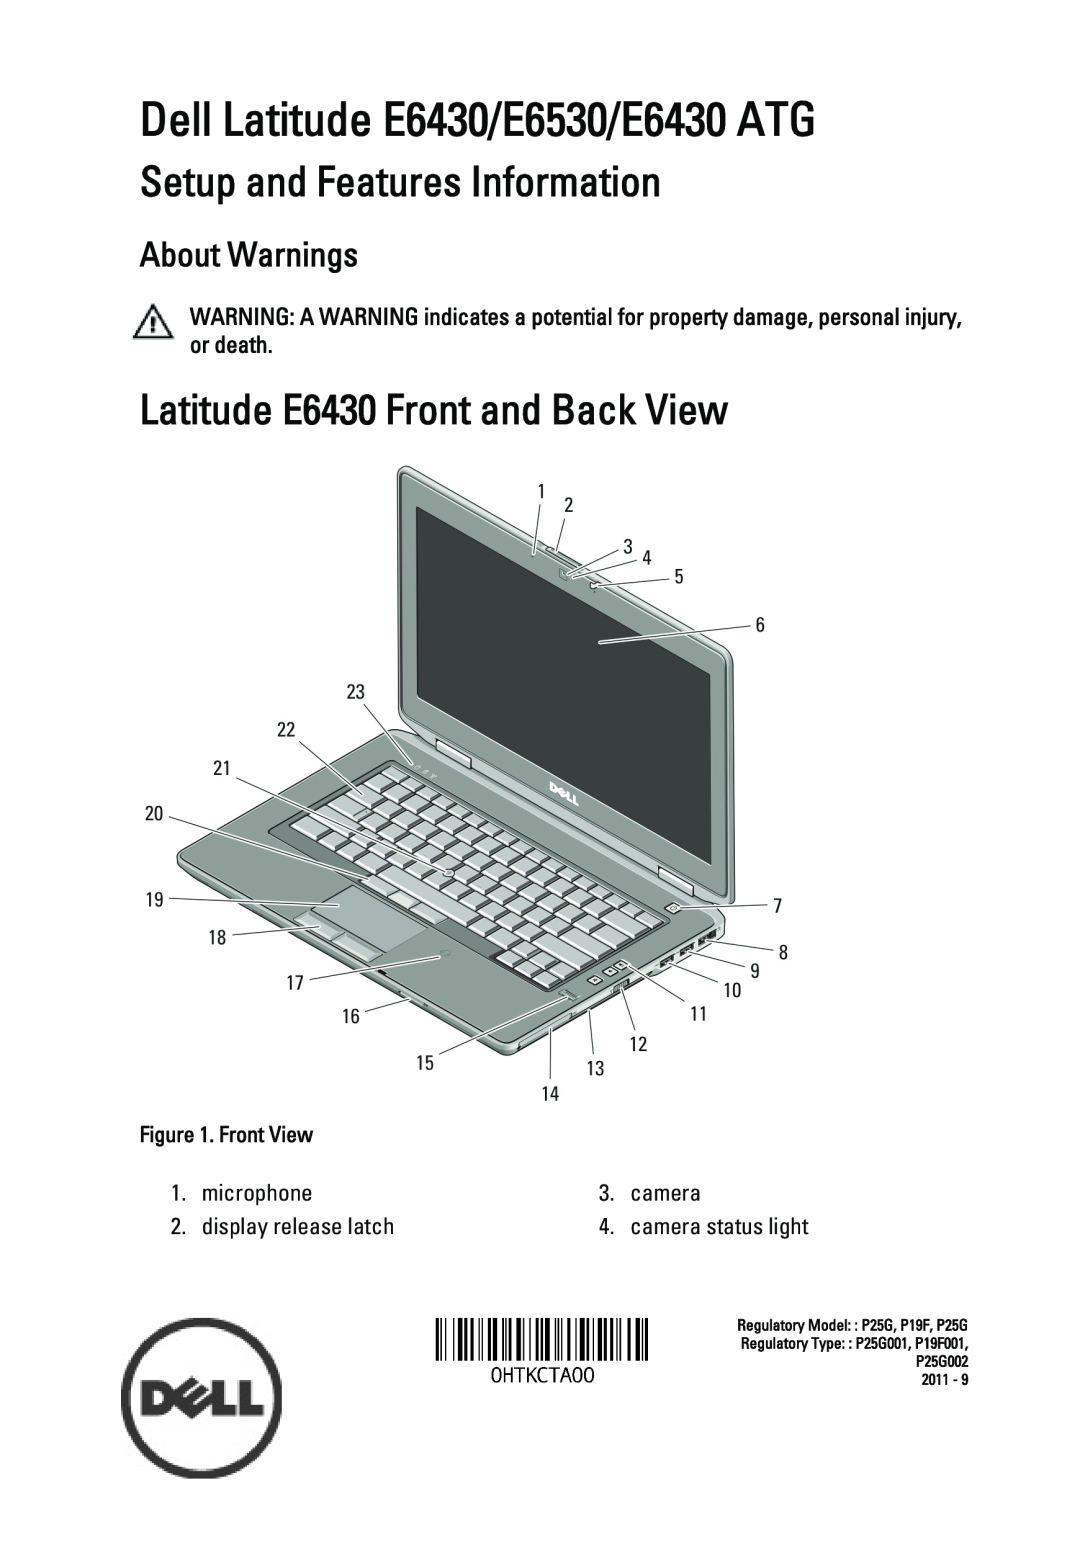 Dell manual Dell Latitude E6530, Inspired Design, Go-Anywhere Productivity, Business-Class Control 